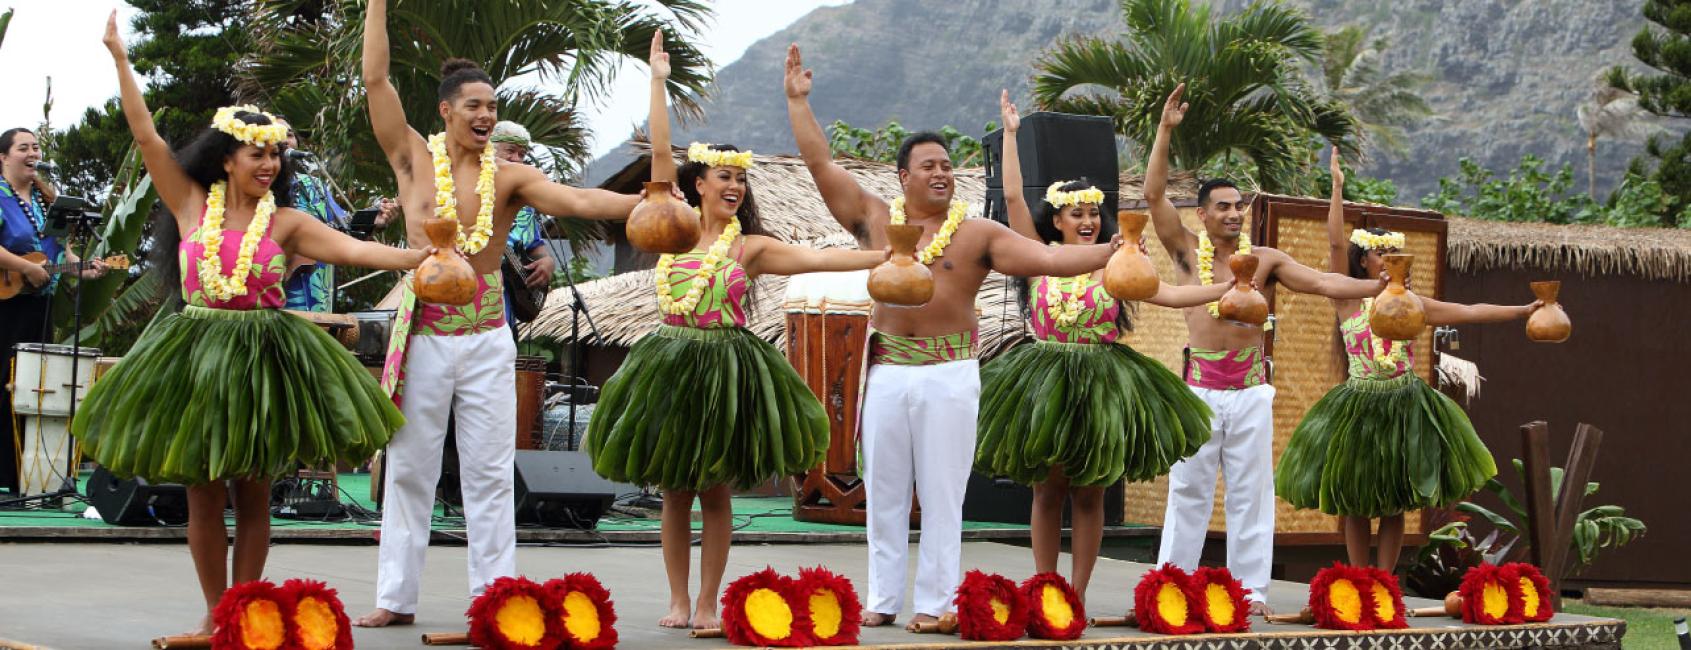 Performers in traditional Hawaiian dress line the stage at the Aloha Kai Luau on Oahu's East Side.